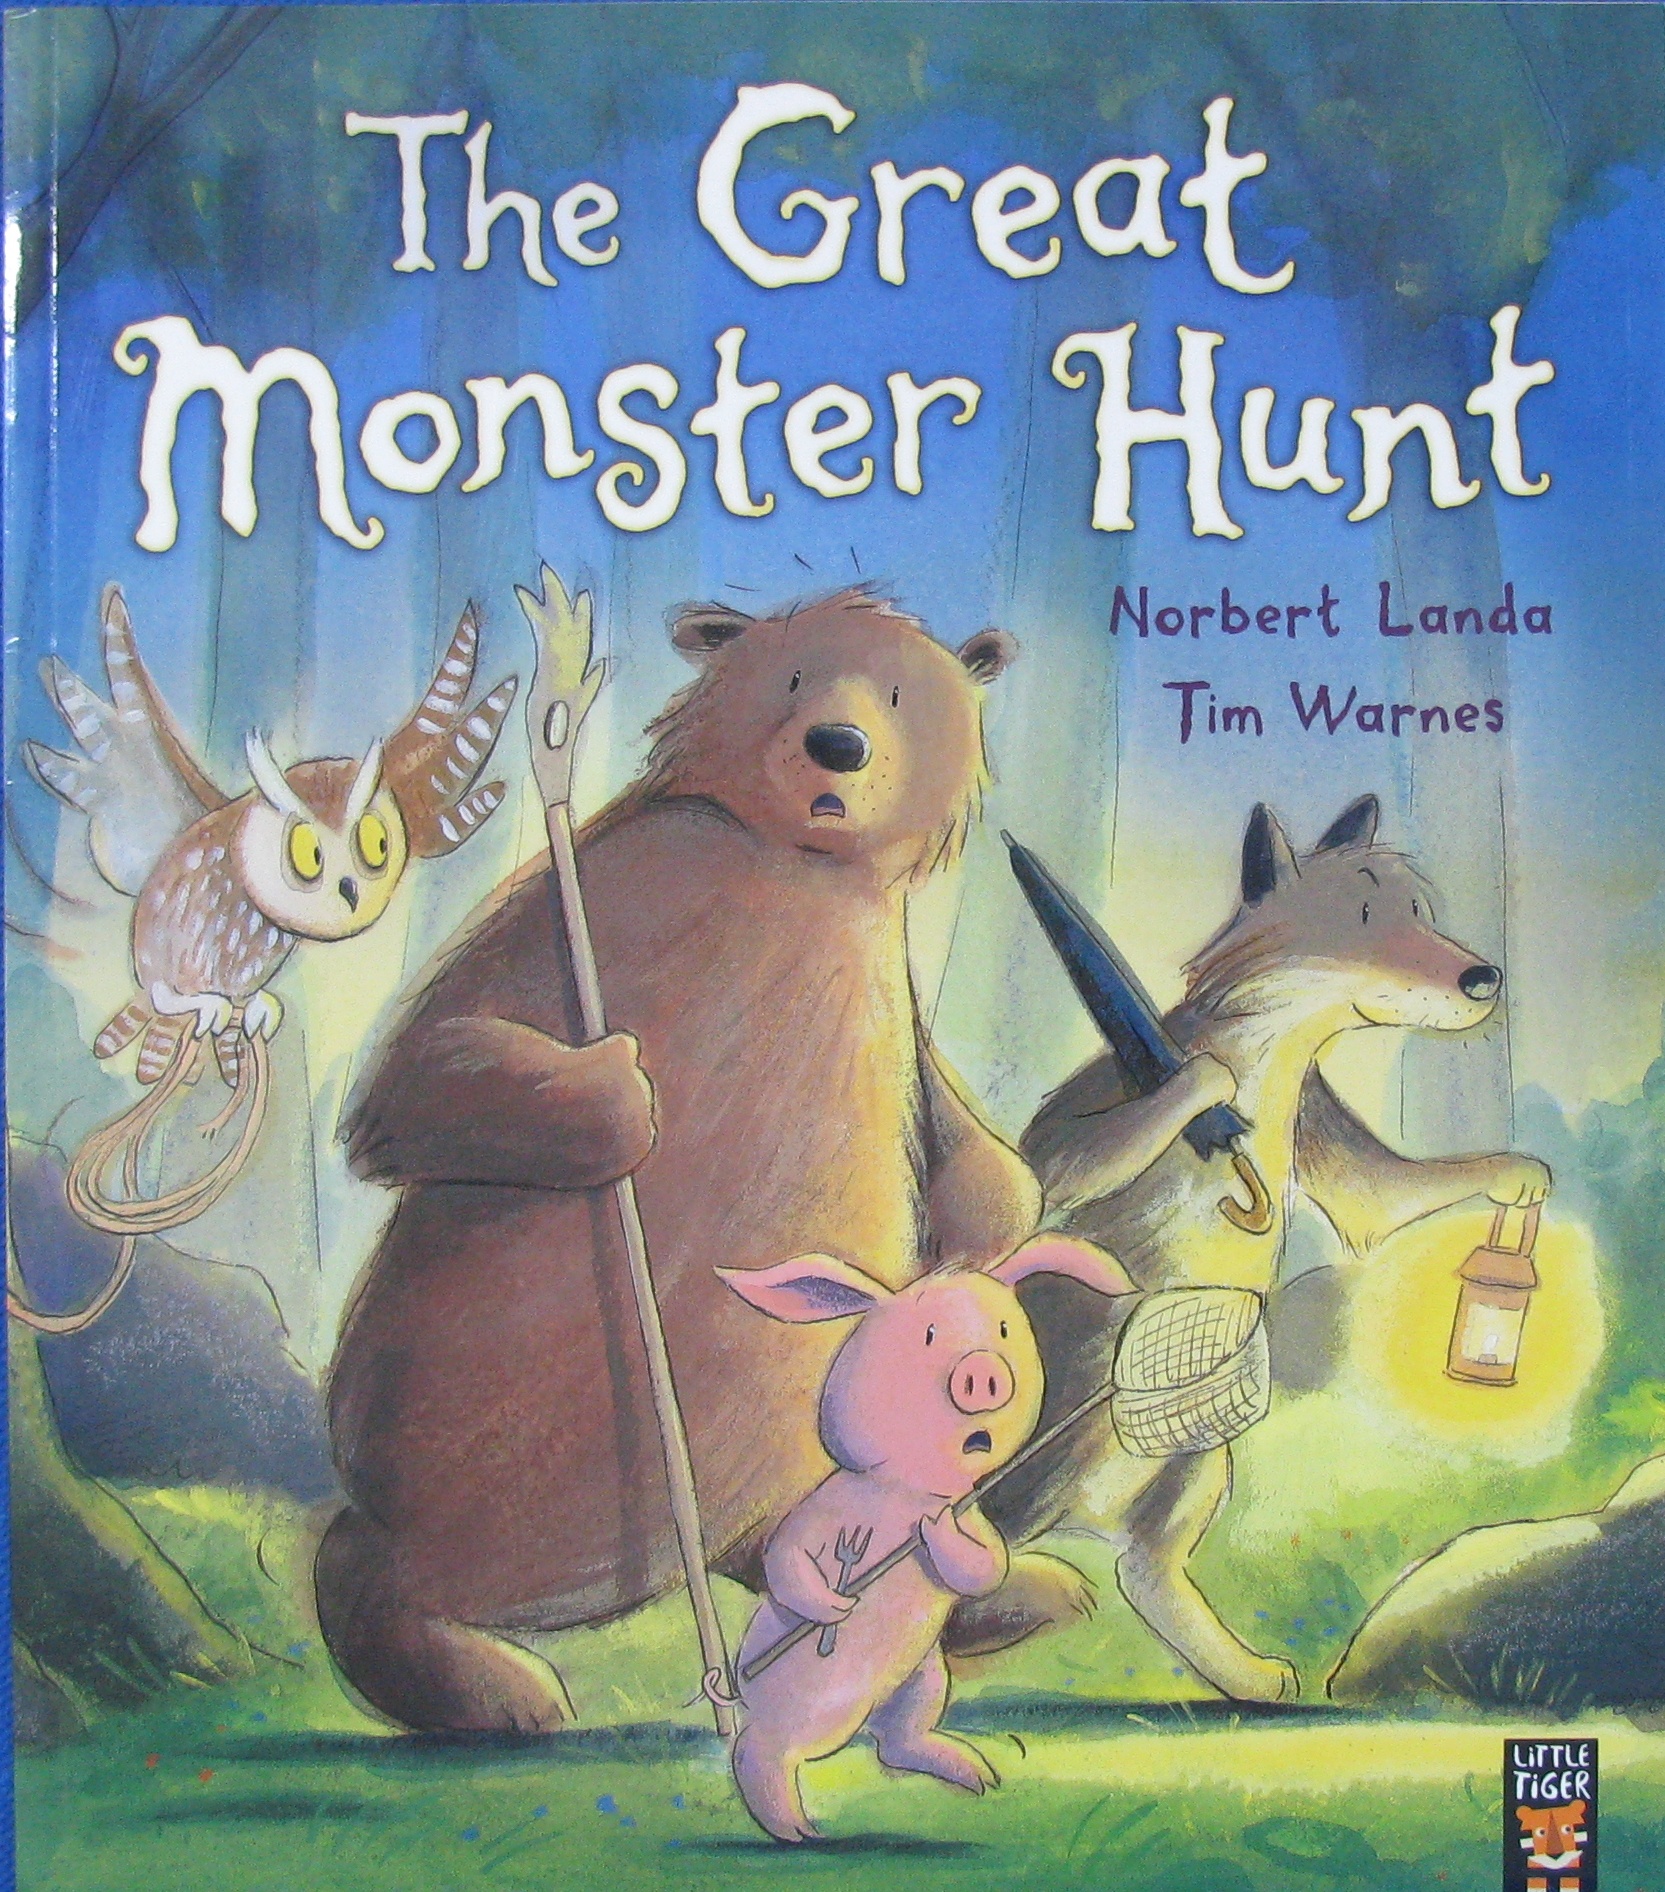 The Great Monster Hunt by Norbert Landa